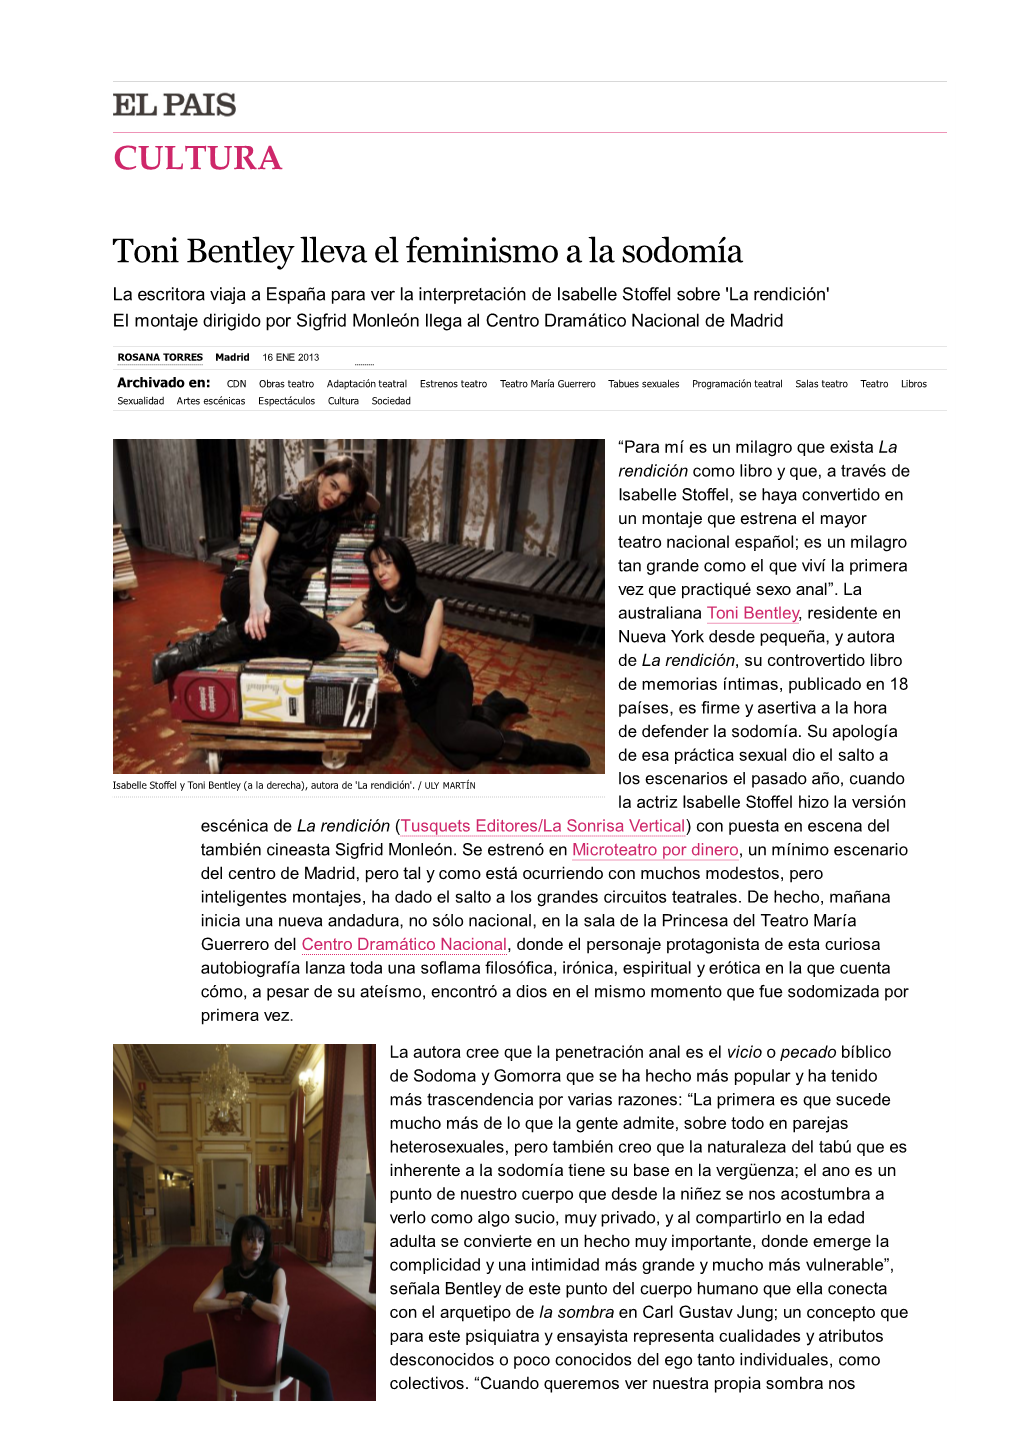 CULTURA Toni Bentley Lleva El Feminismo a La Sodomía